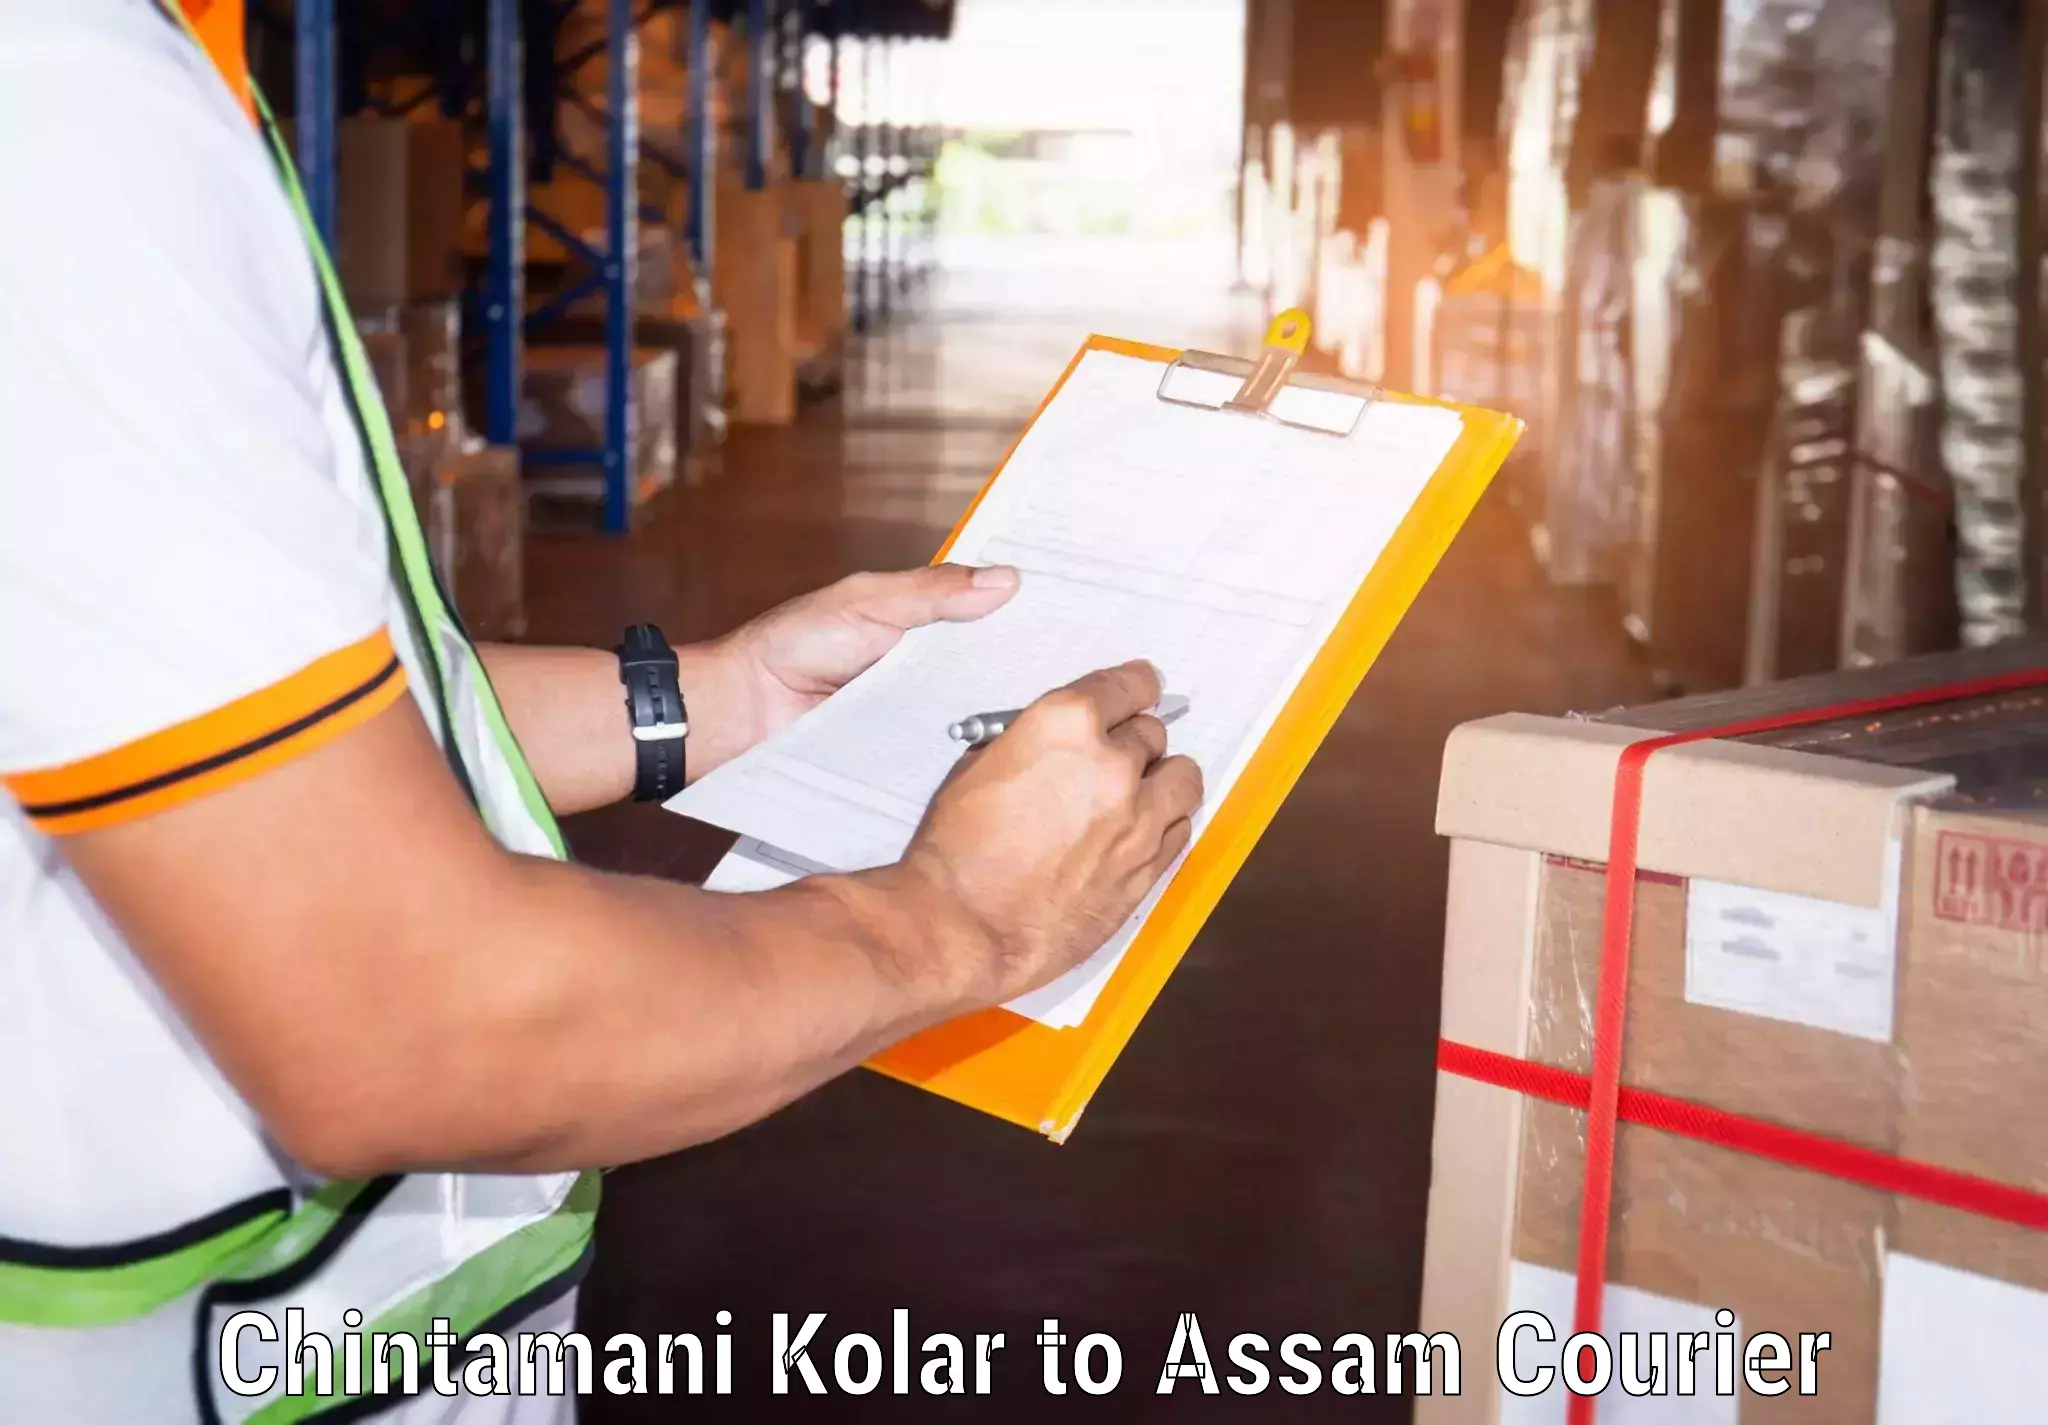 Courier service innovation Chintamani Kolar to Banderdewa